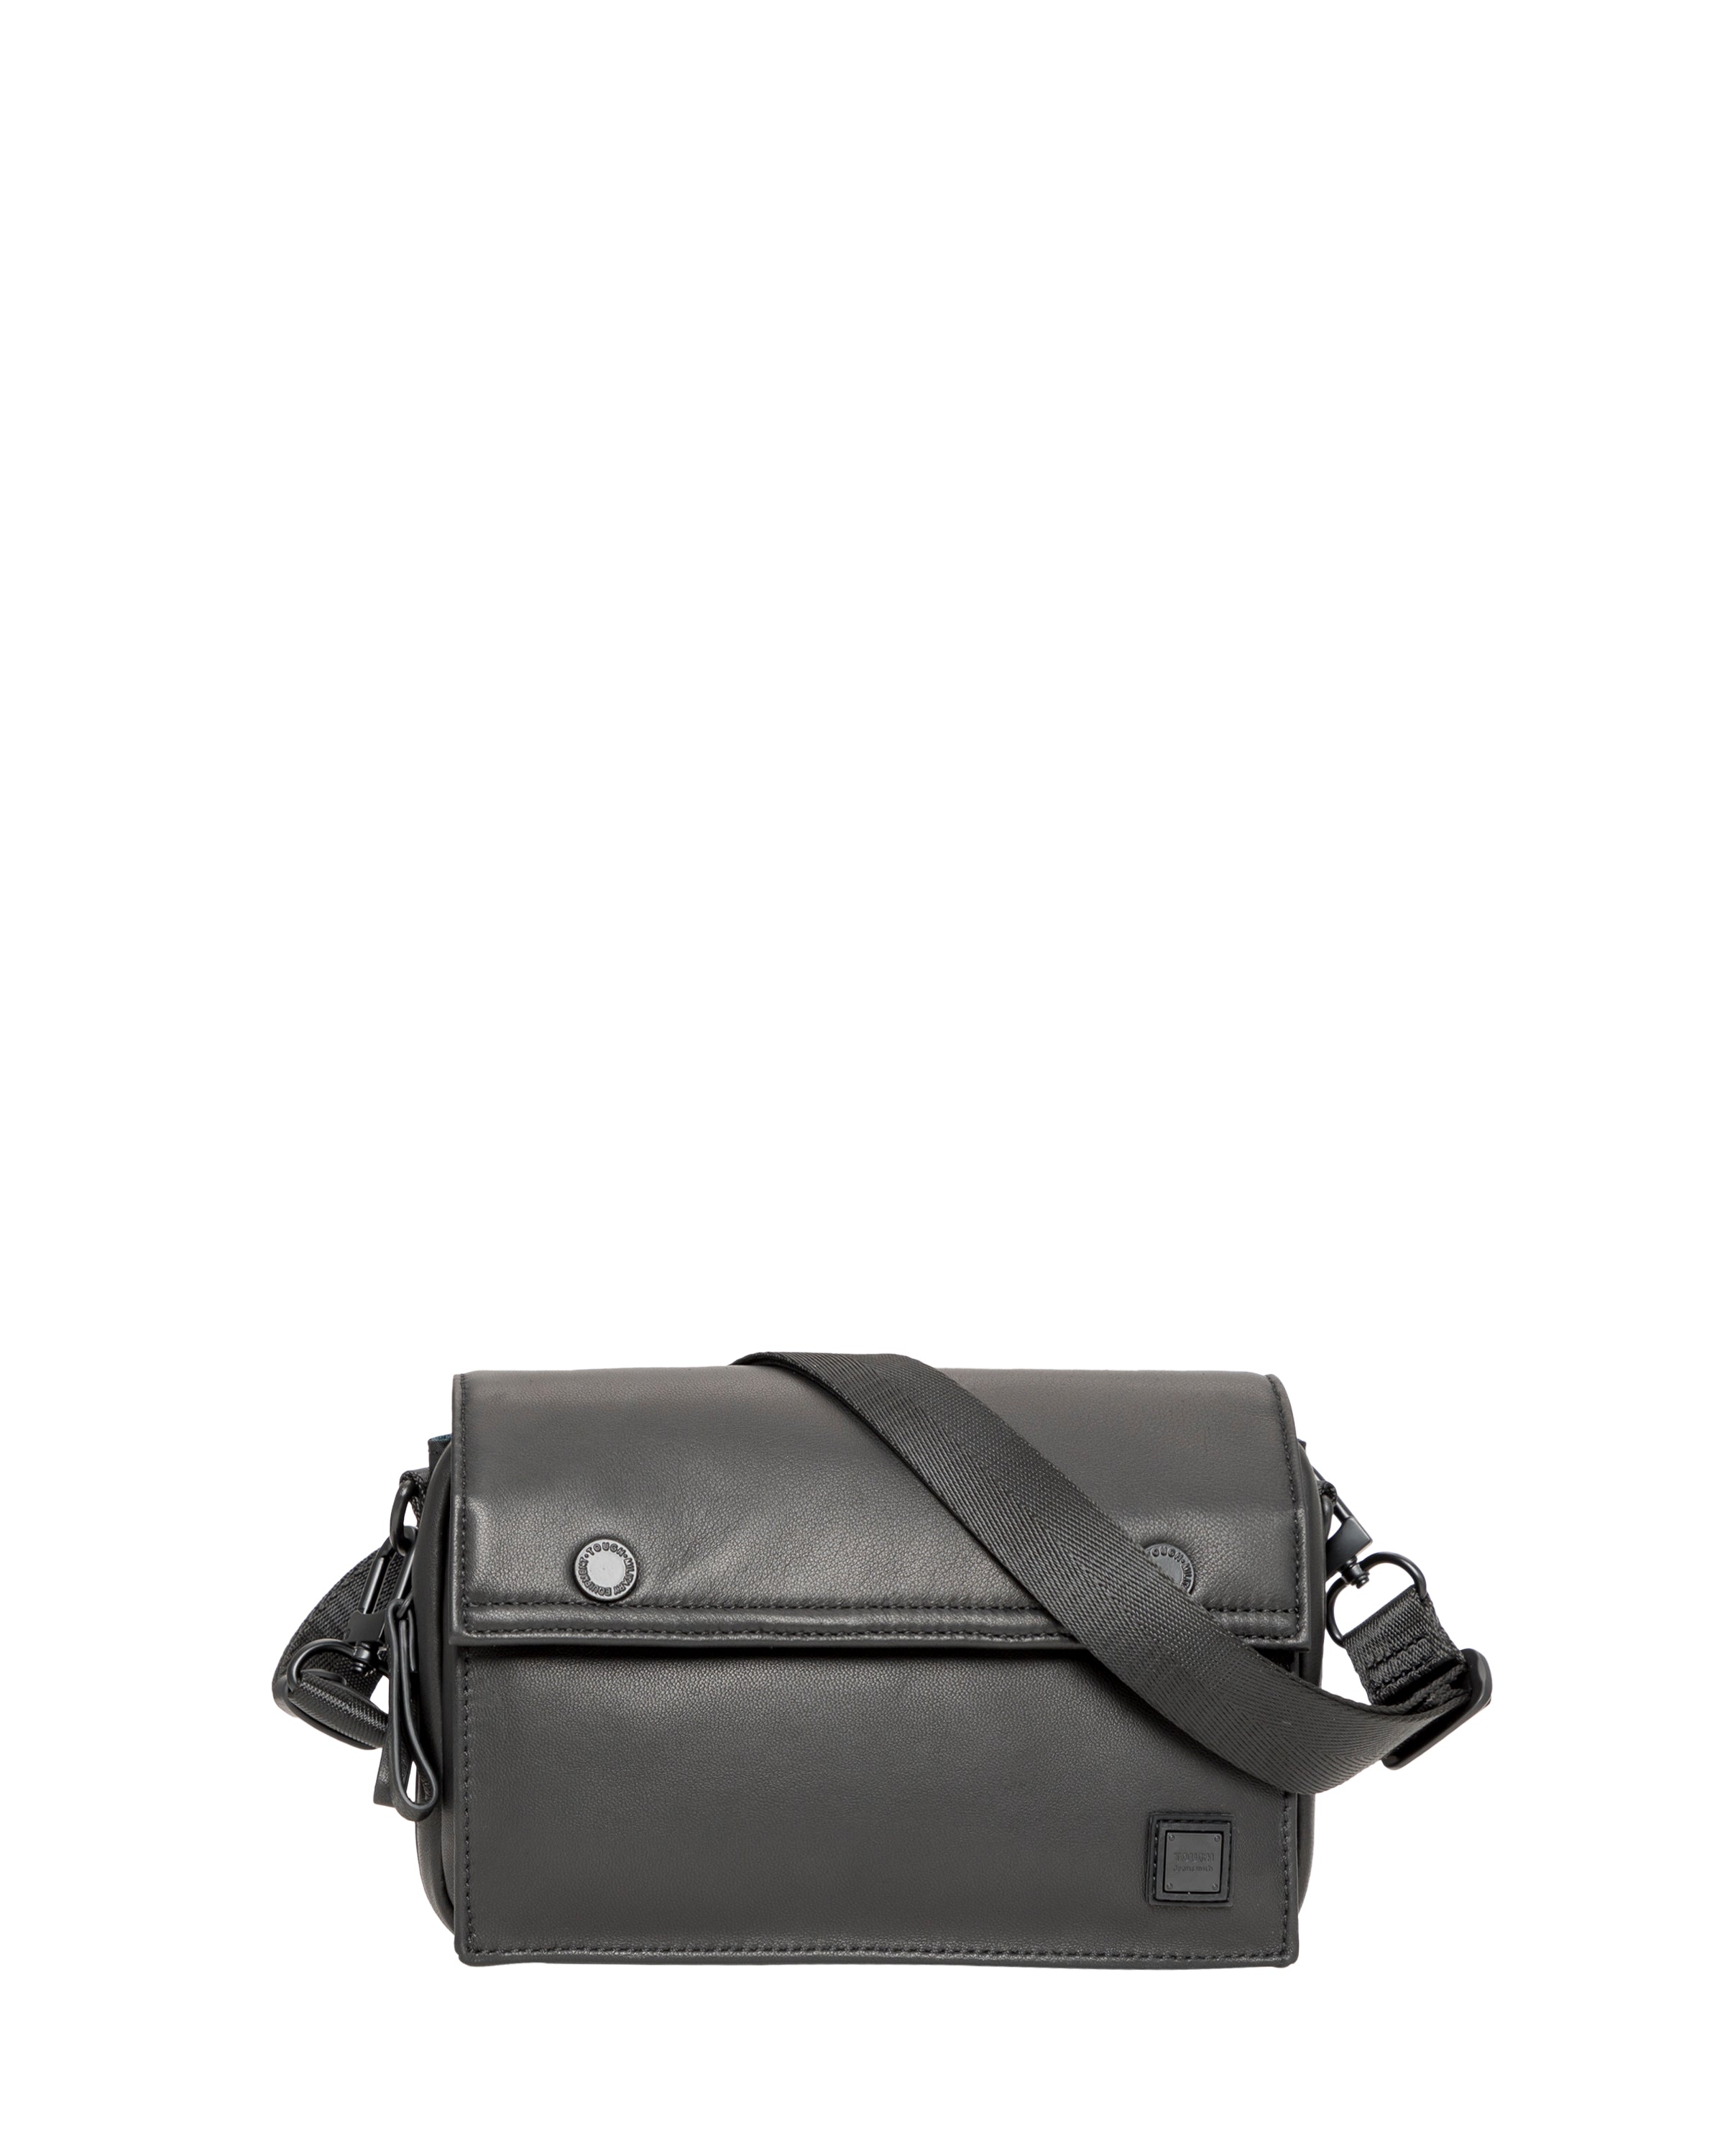 TOUGH JEANSMITH crossbody bag/waist bag #TB223-022